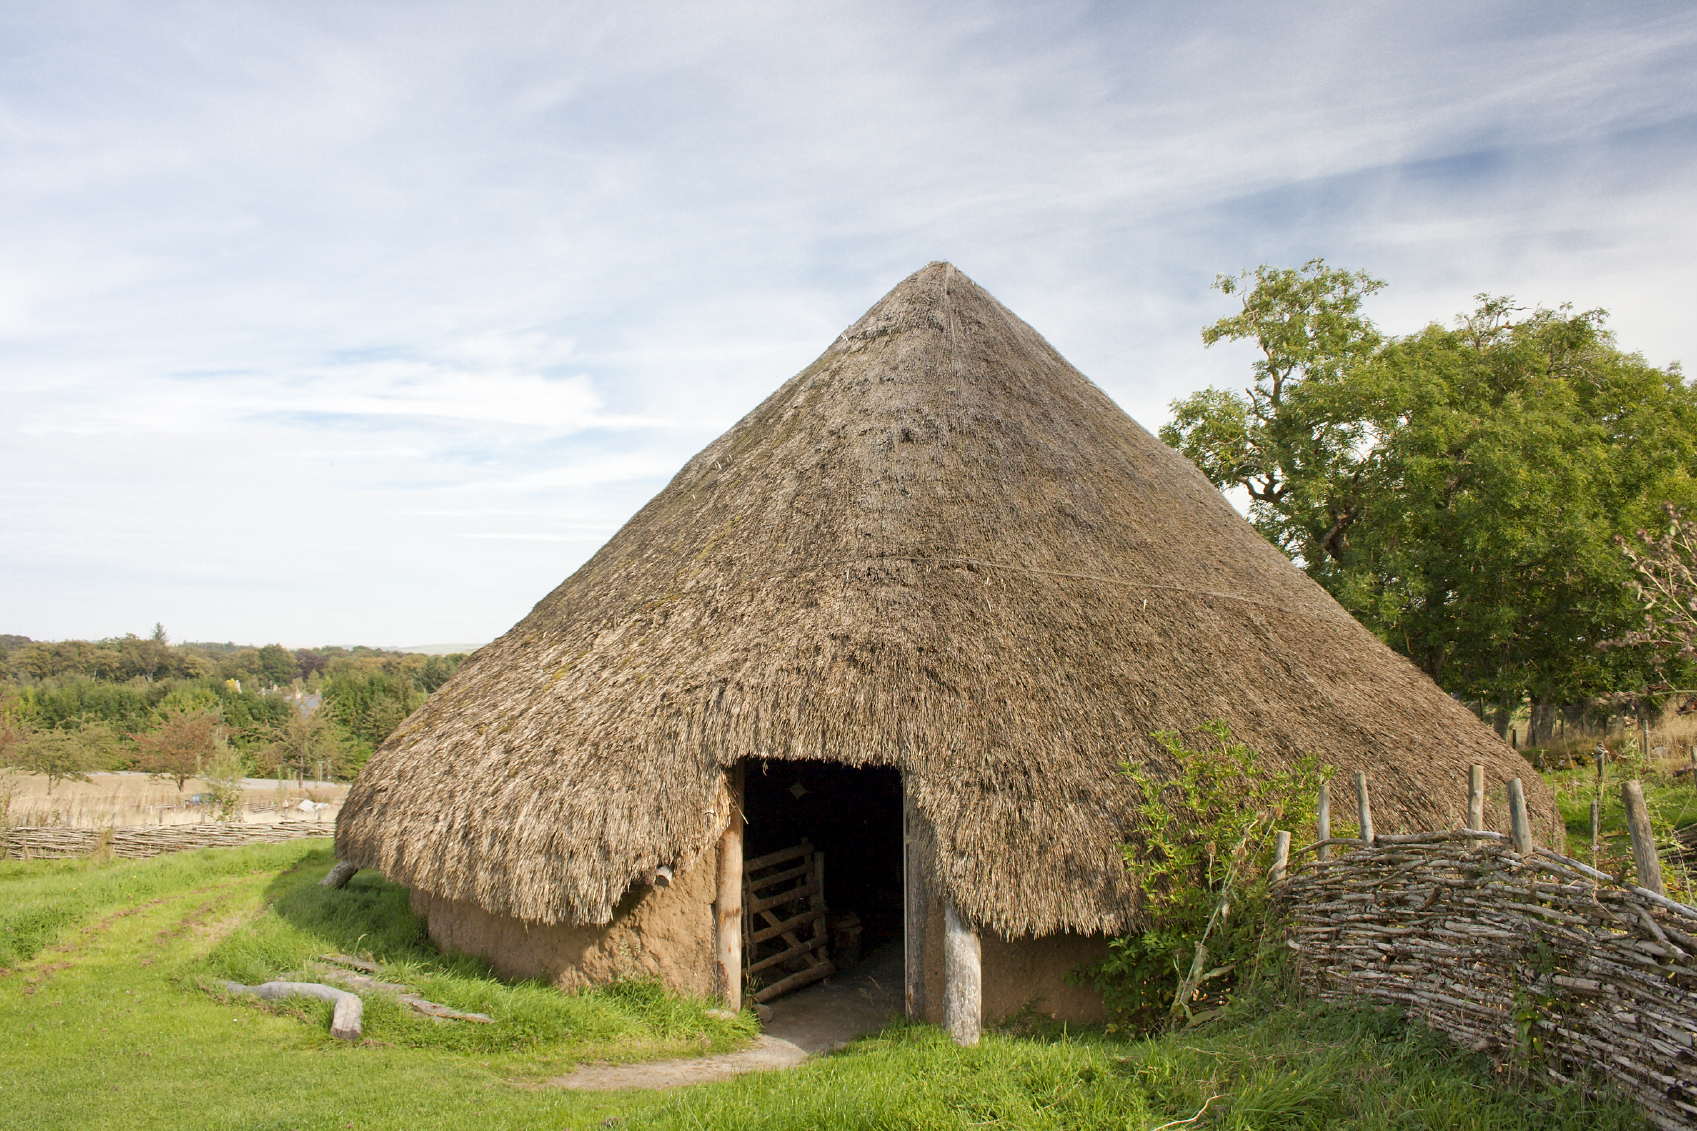 Iron Age Celts - Woodland Classroom